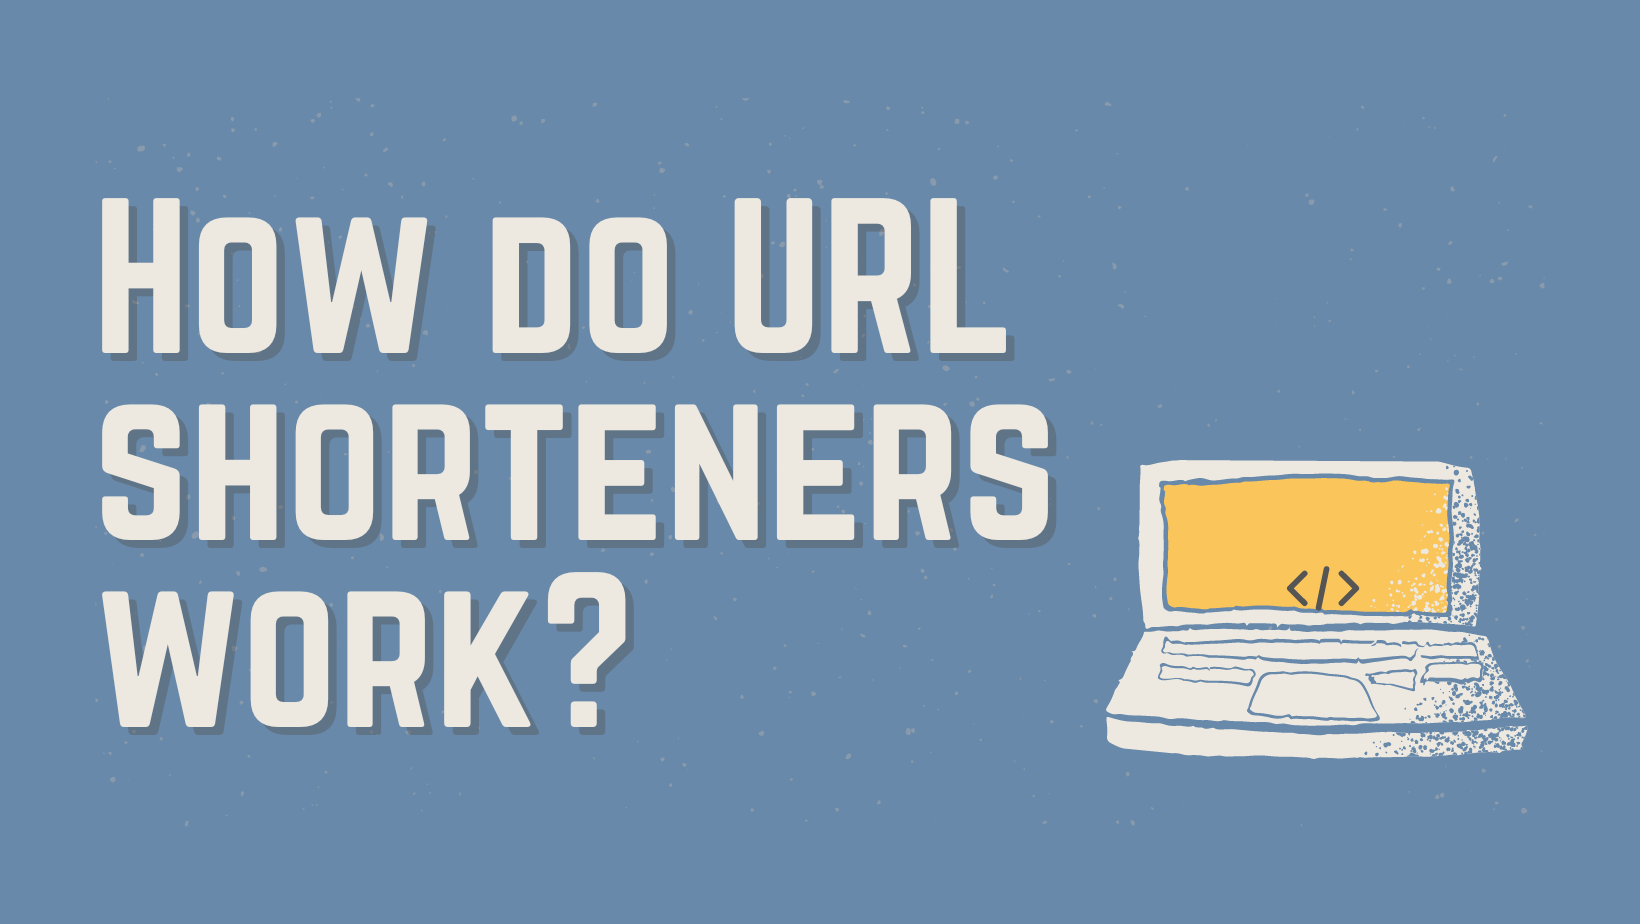 How do URL shorteners work?